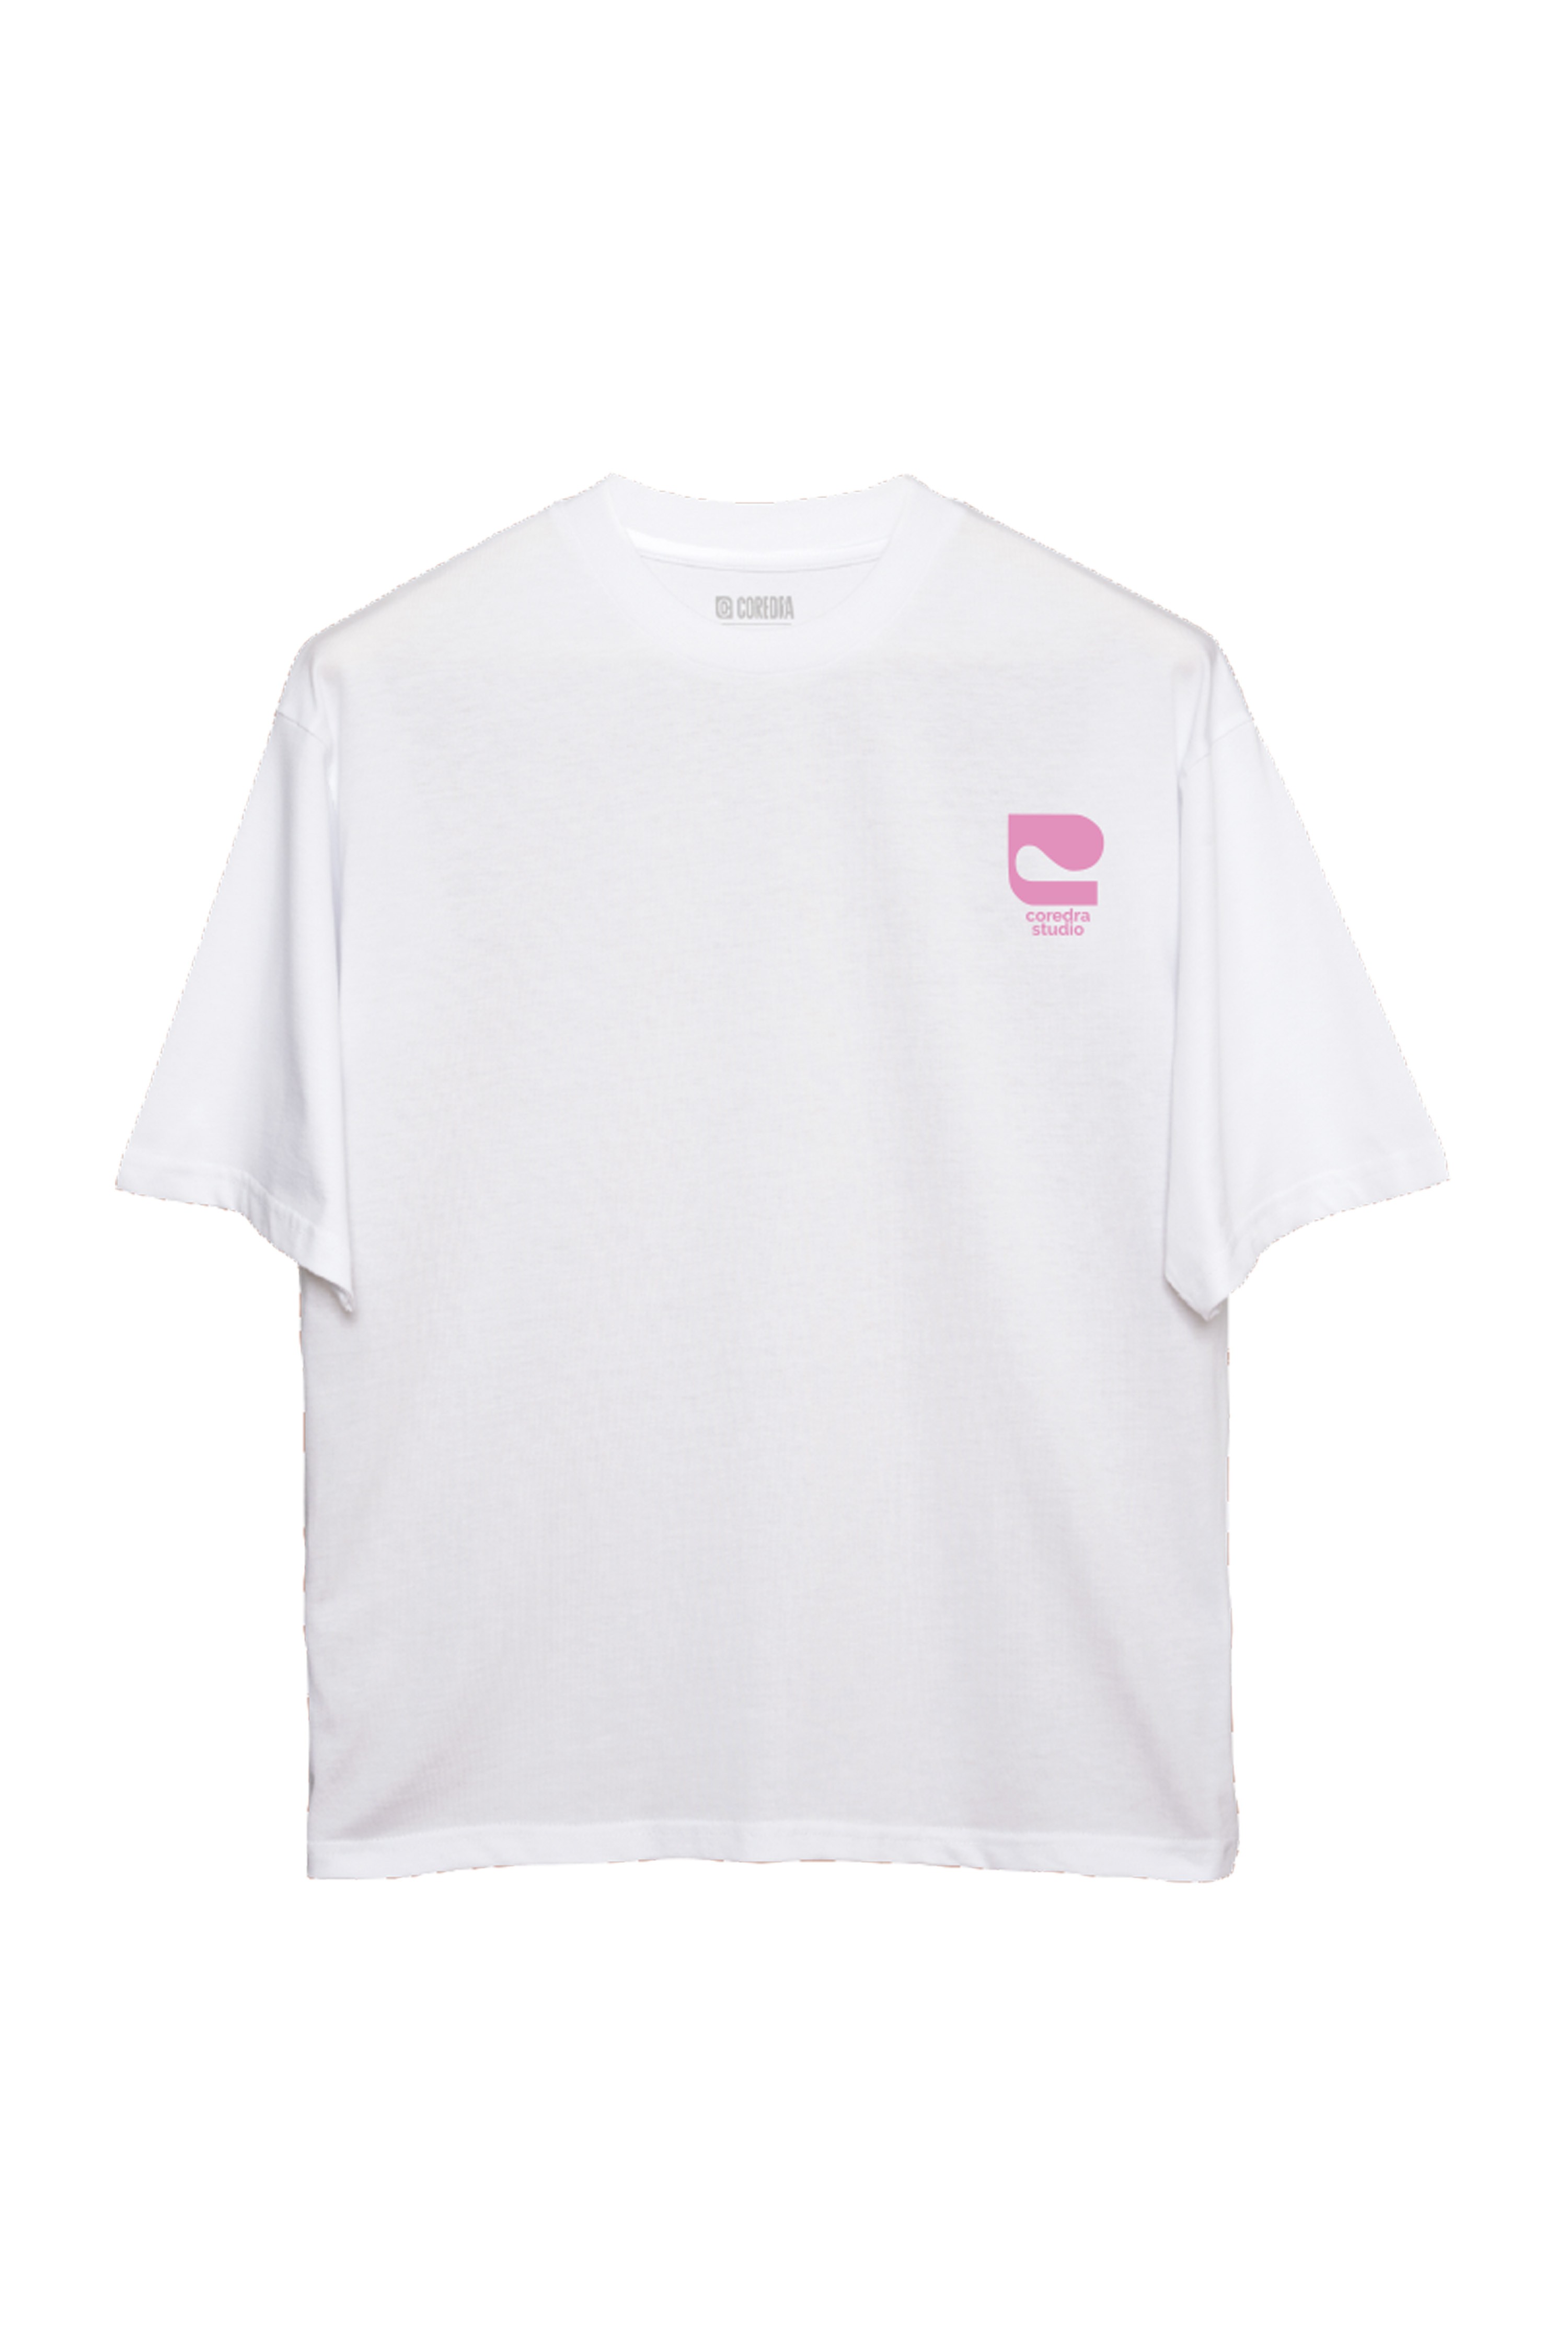 Love Letters Oversize T-Shirt Erkek - Beyaz